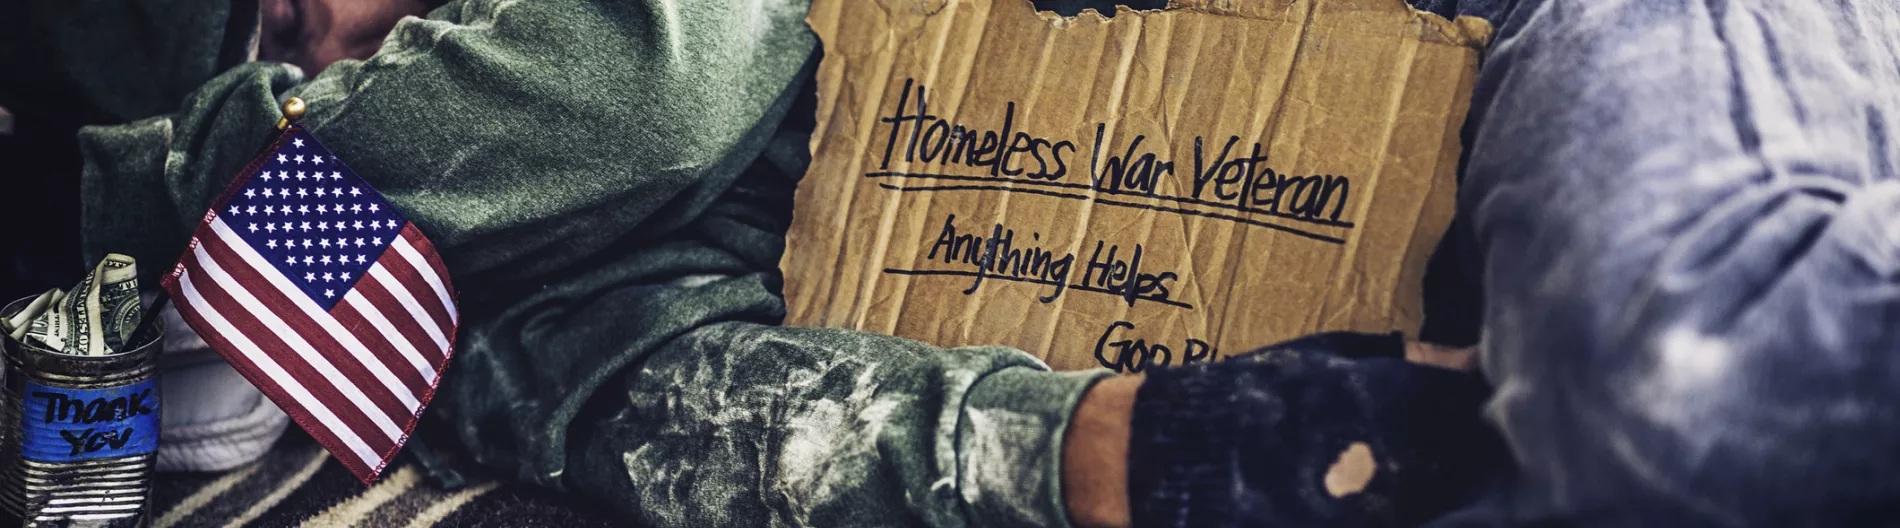 Homeless war veteran sleeping with sign and money tin